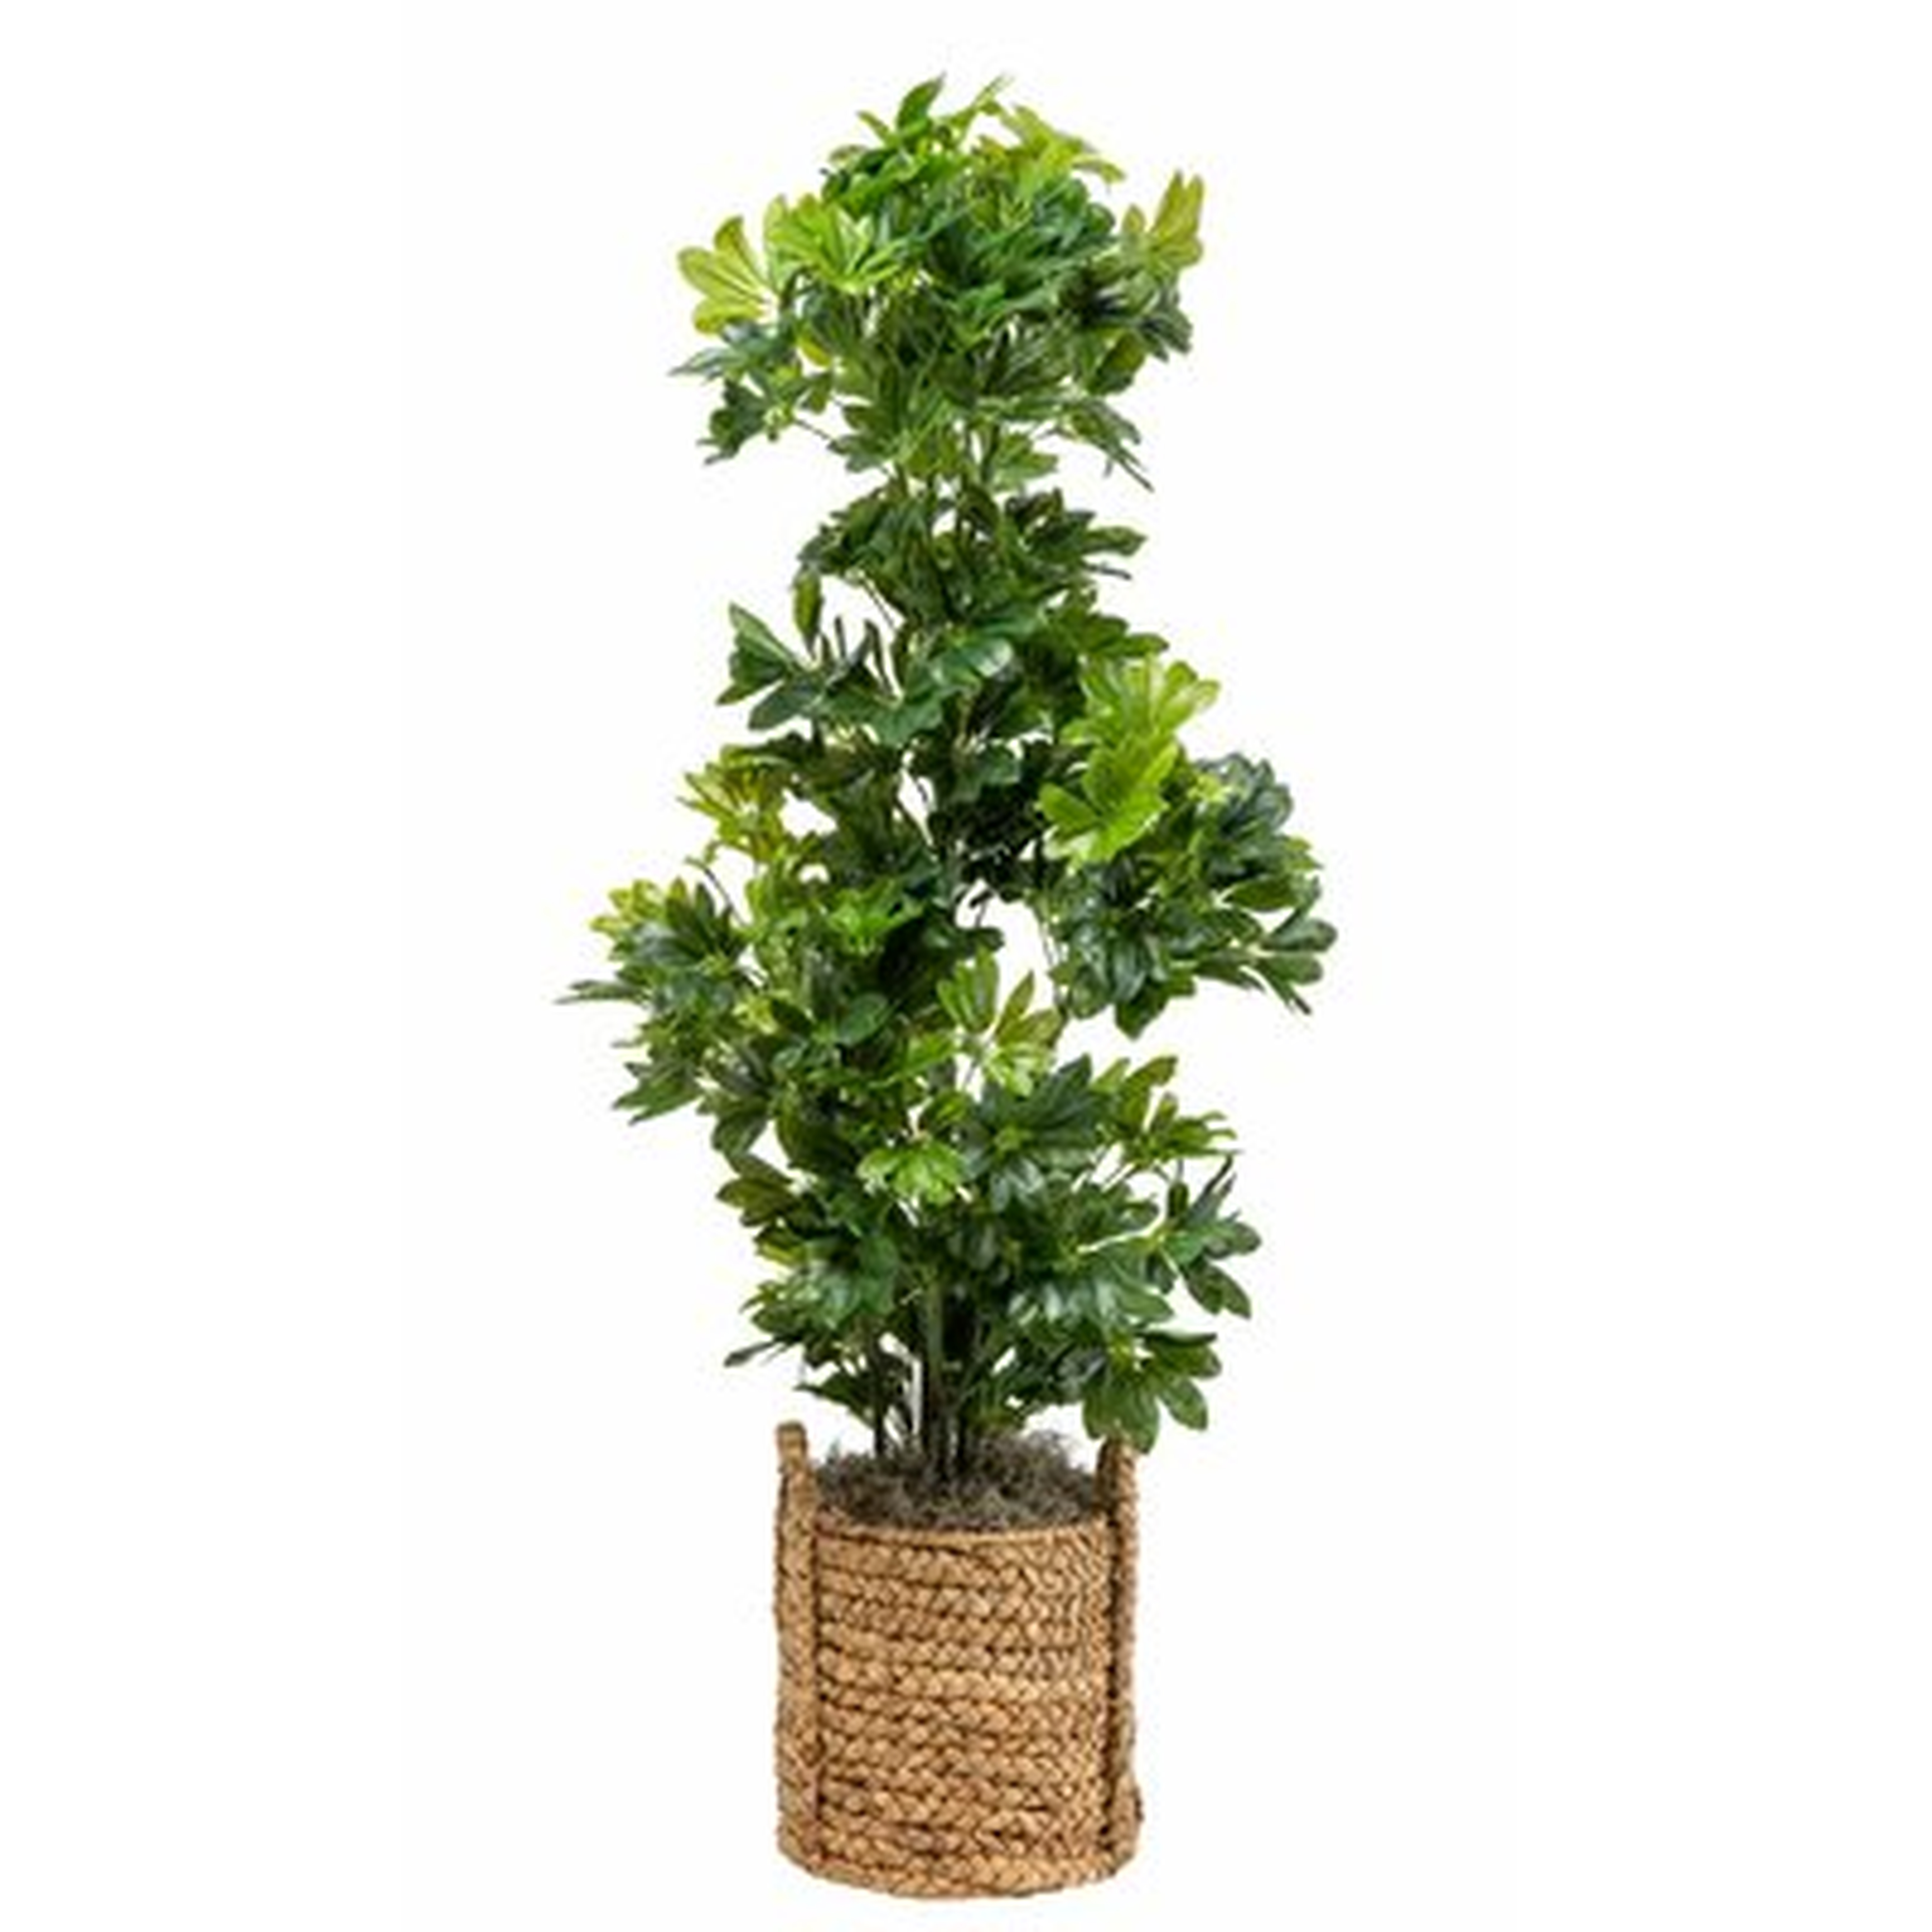 66" Artificial Foliage Tree in Basket - Wayfair